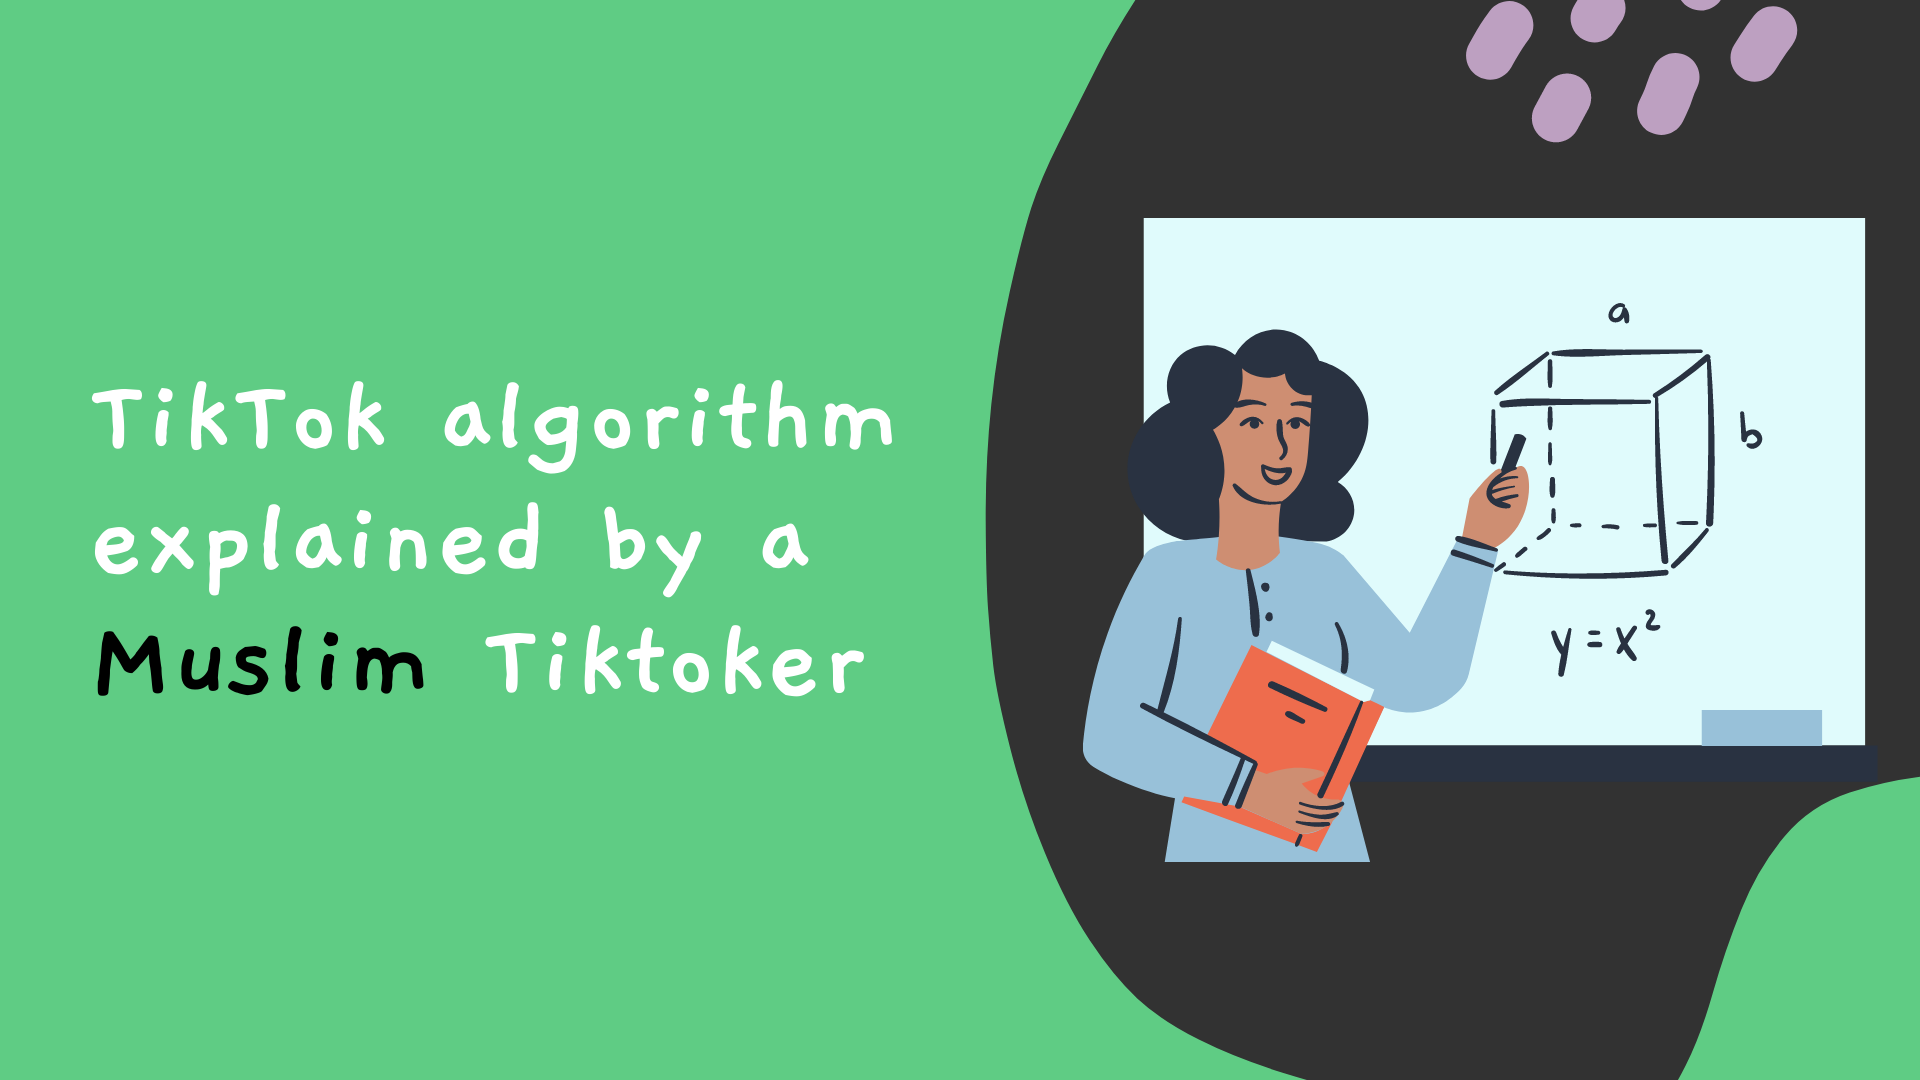 Tiktok algorithm explained by a Muslim